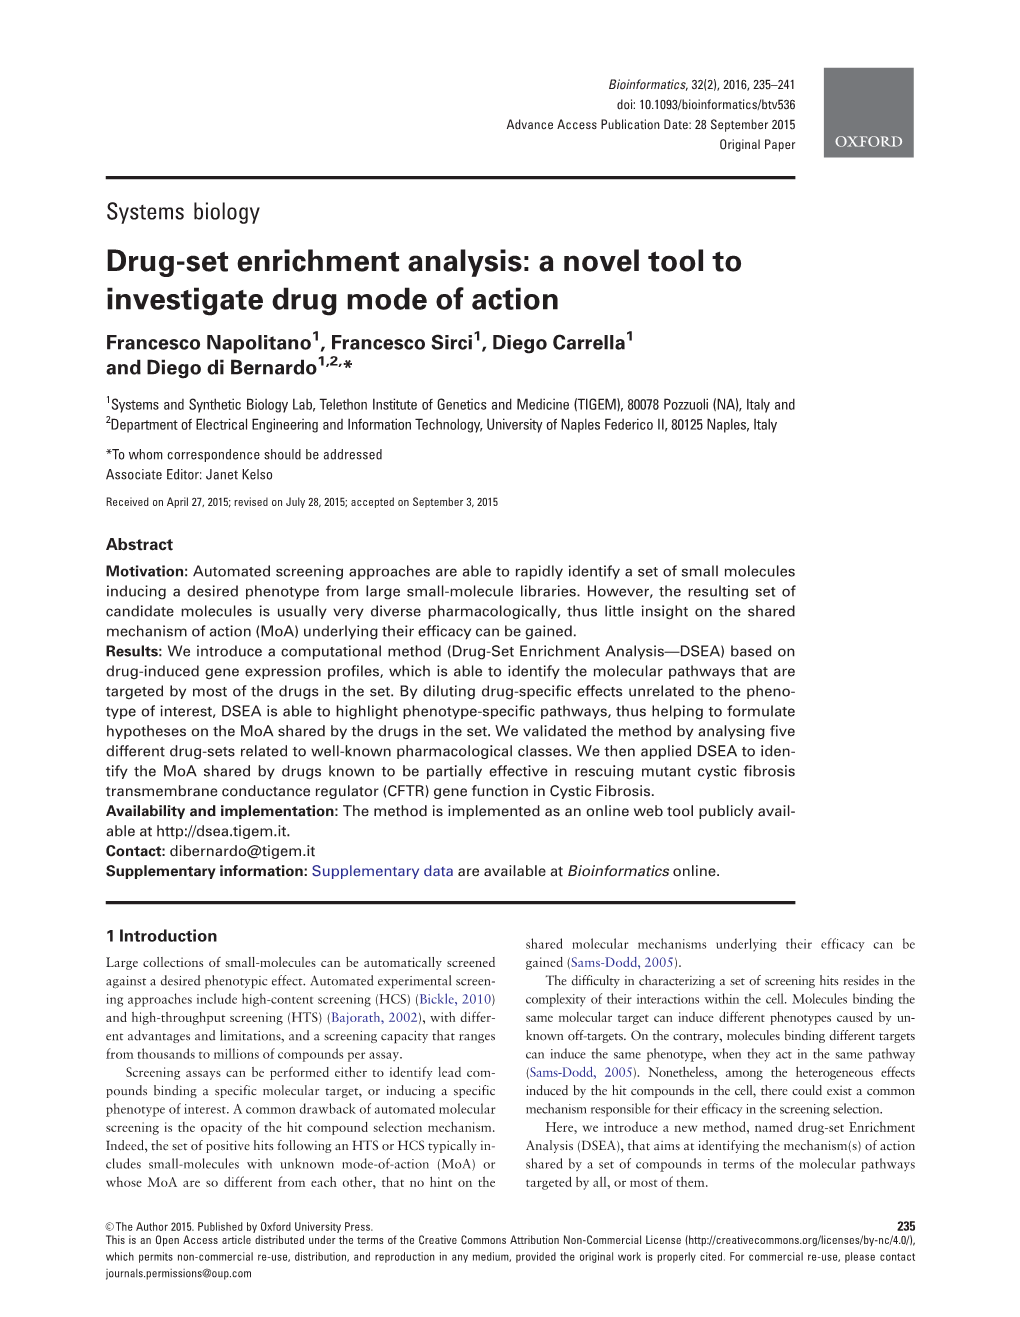 Drug-Set Enrichment Analysis: a Novel Tool to Investigate Drug Mode of Action Francesco Napolitano1, Francesco Sirci1, Diego Carrella1 and Diego Di Bernardo1,2,*